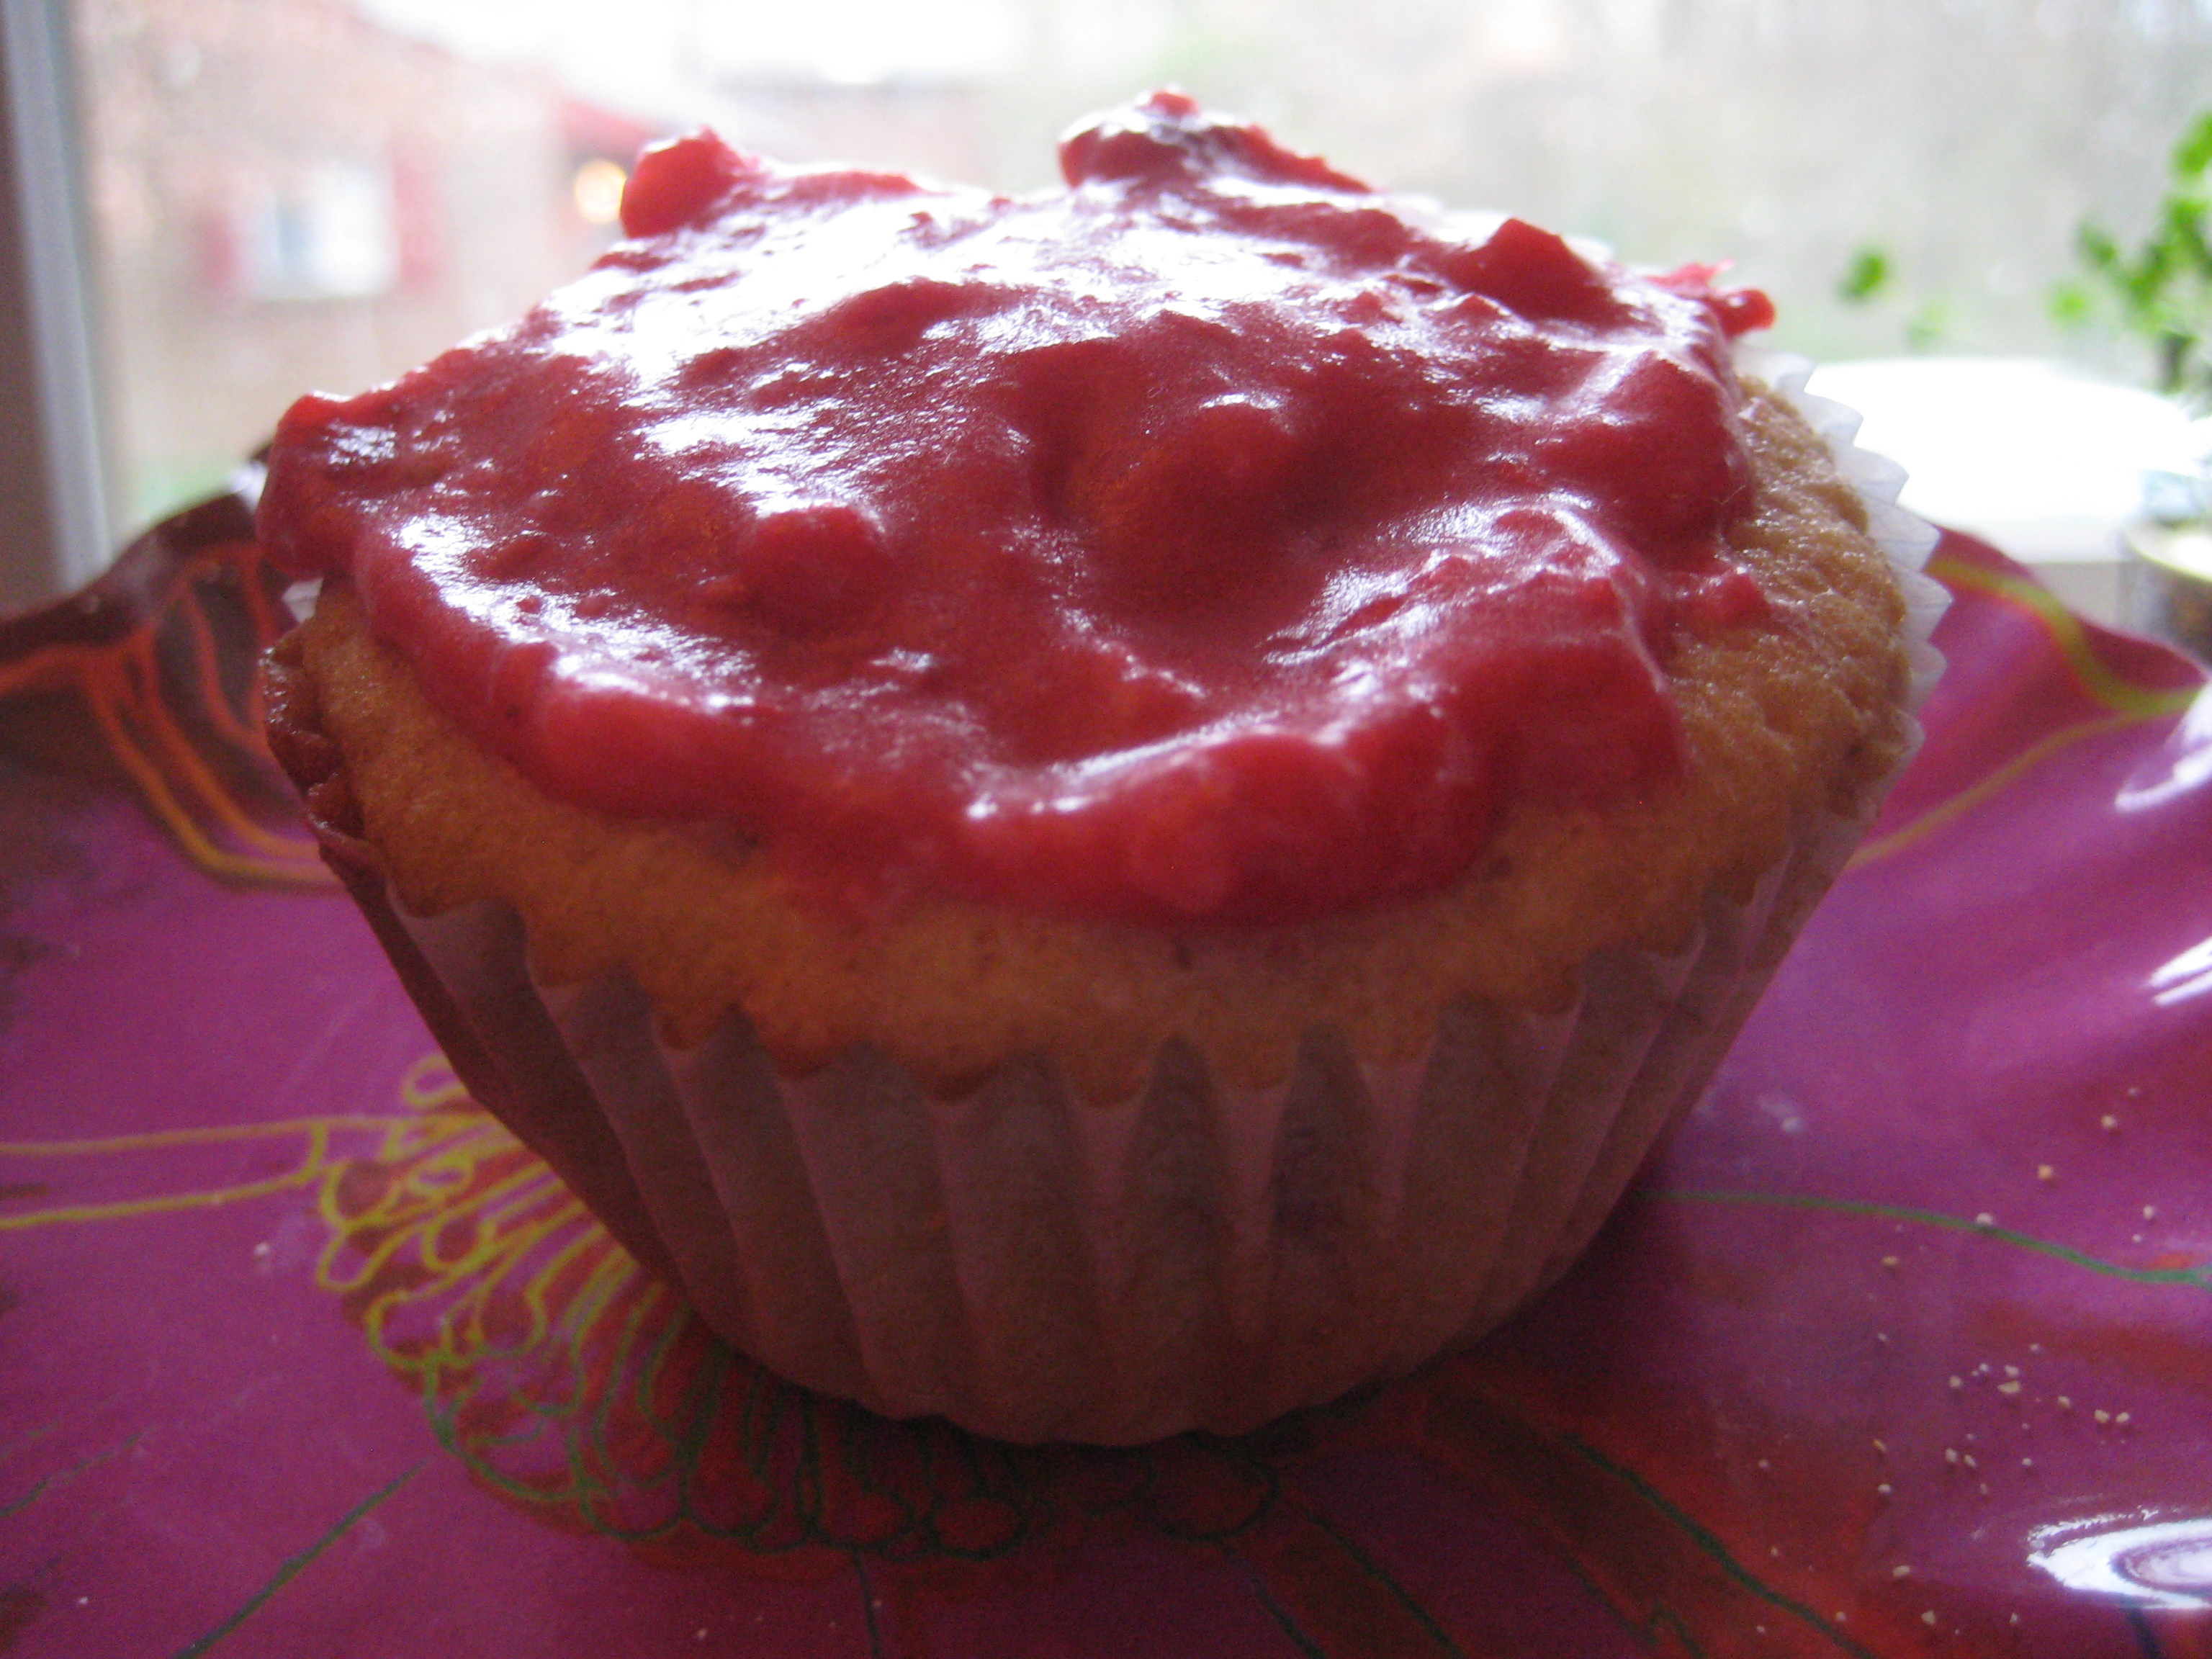 "Raspberry cupcake